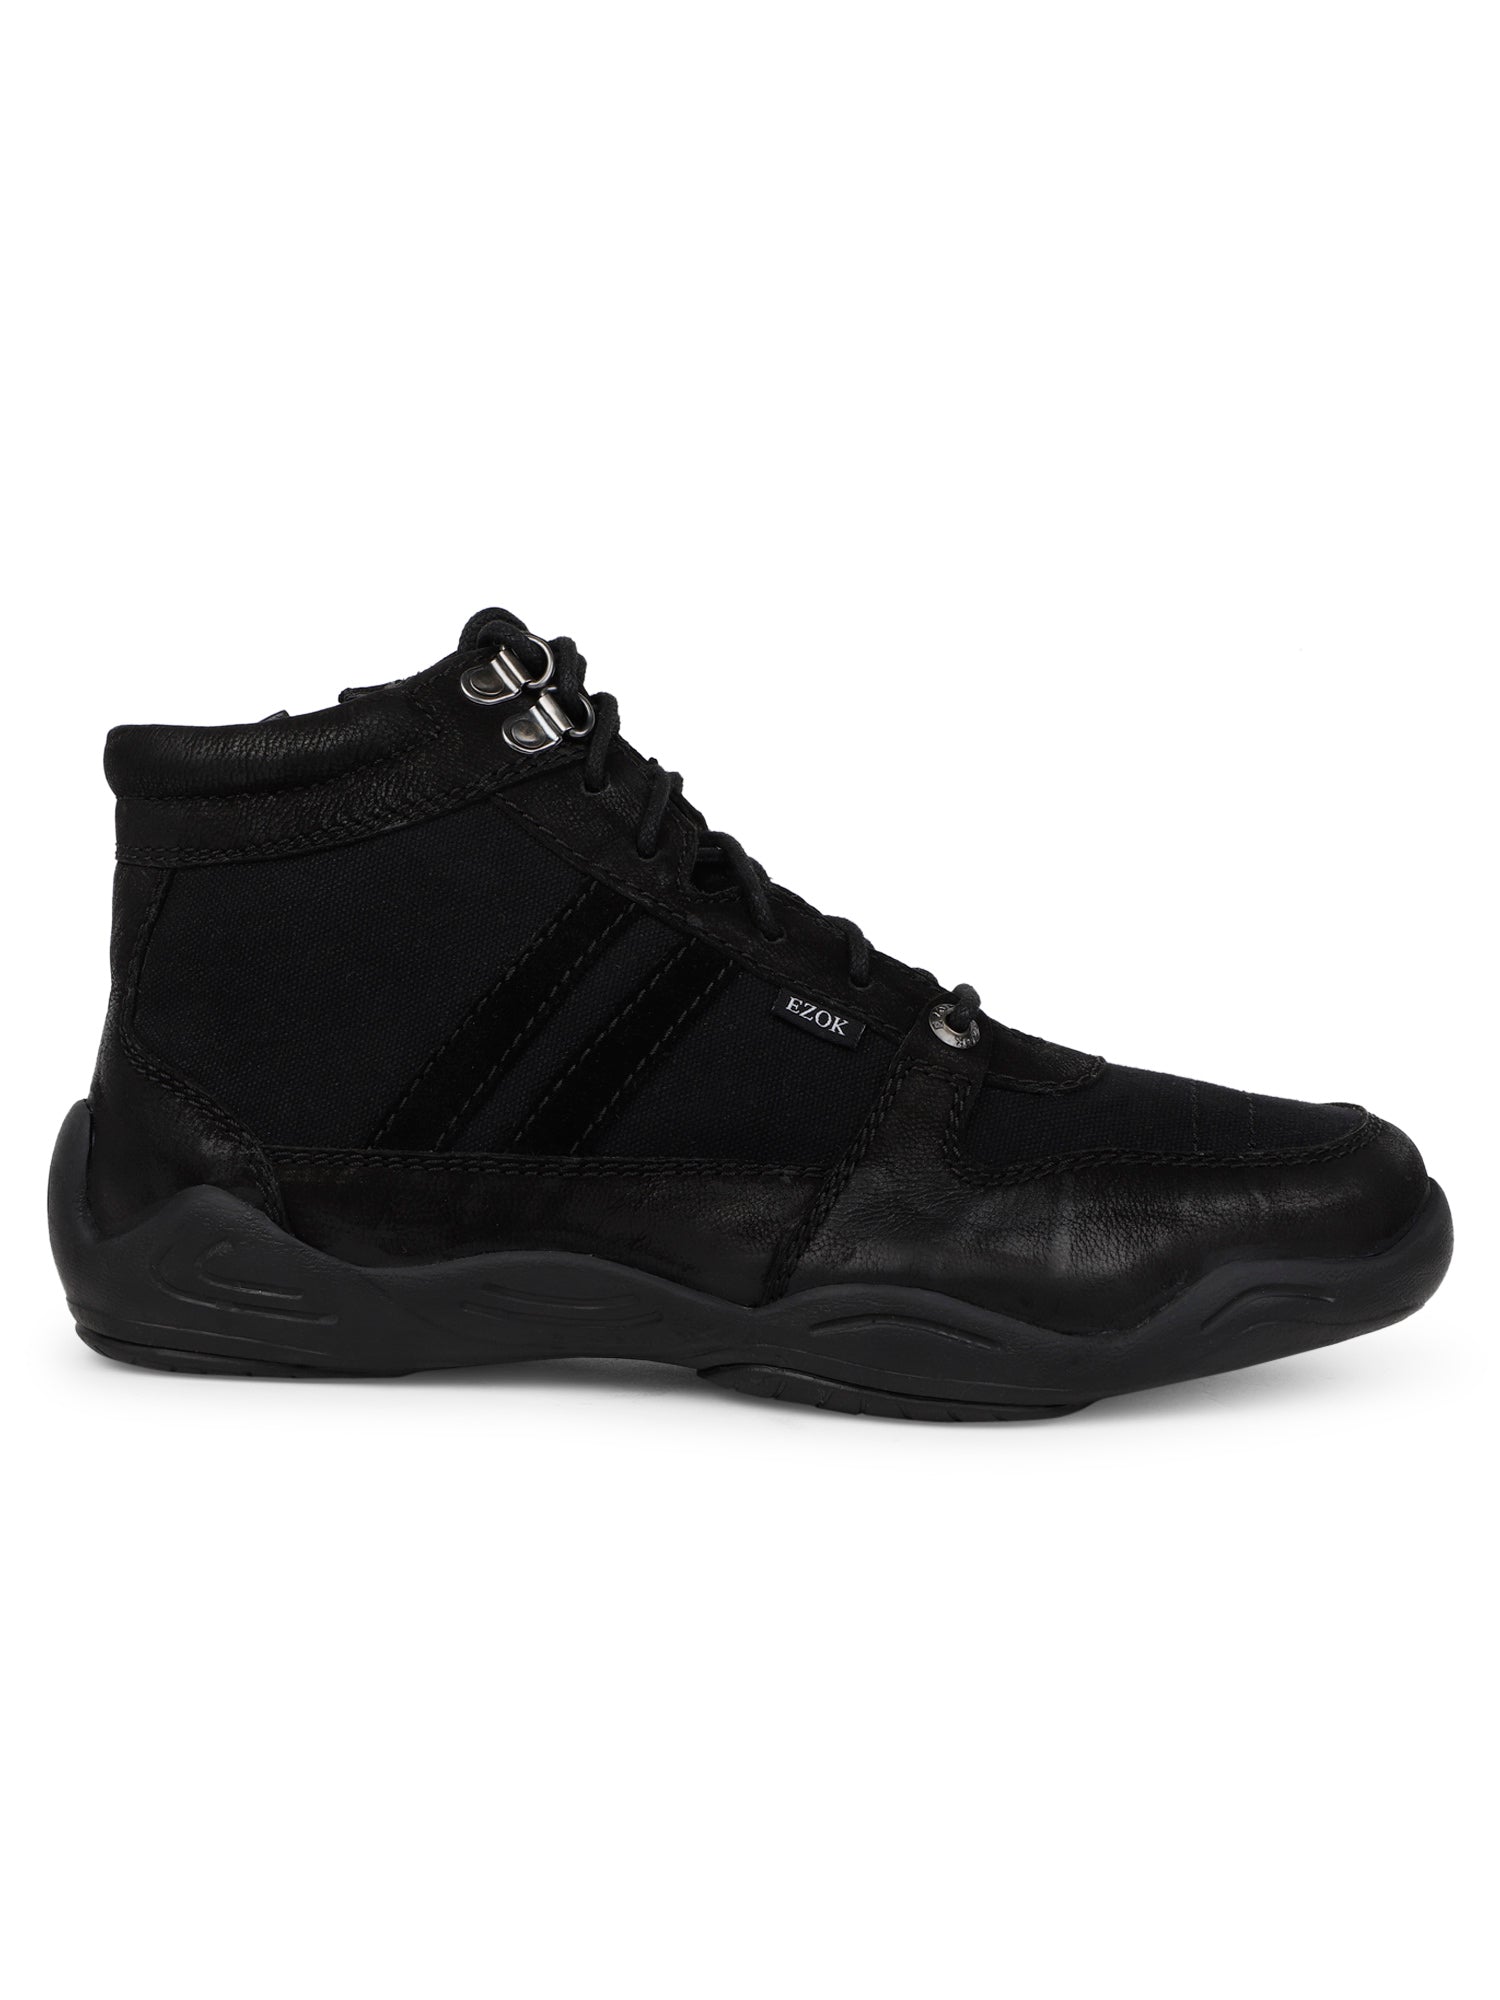 Ezok Black Strech Casual Boots Shoes